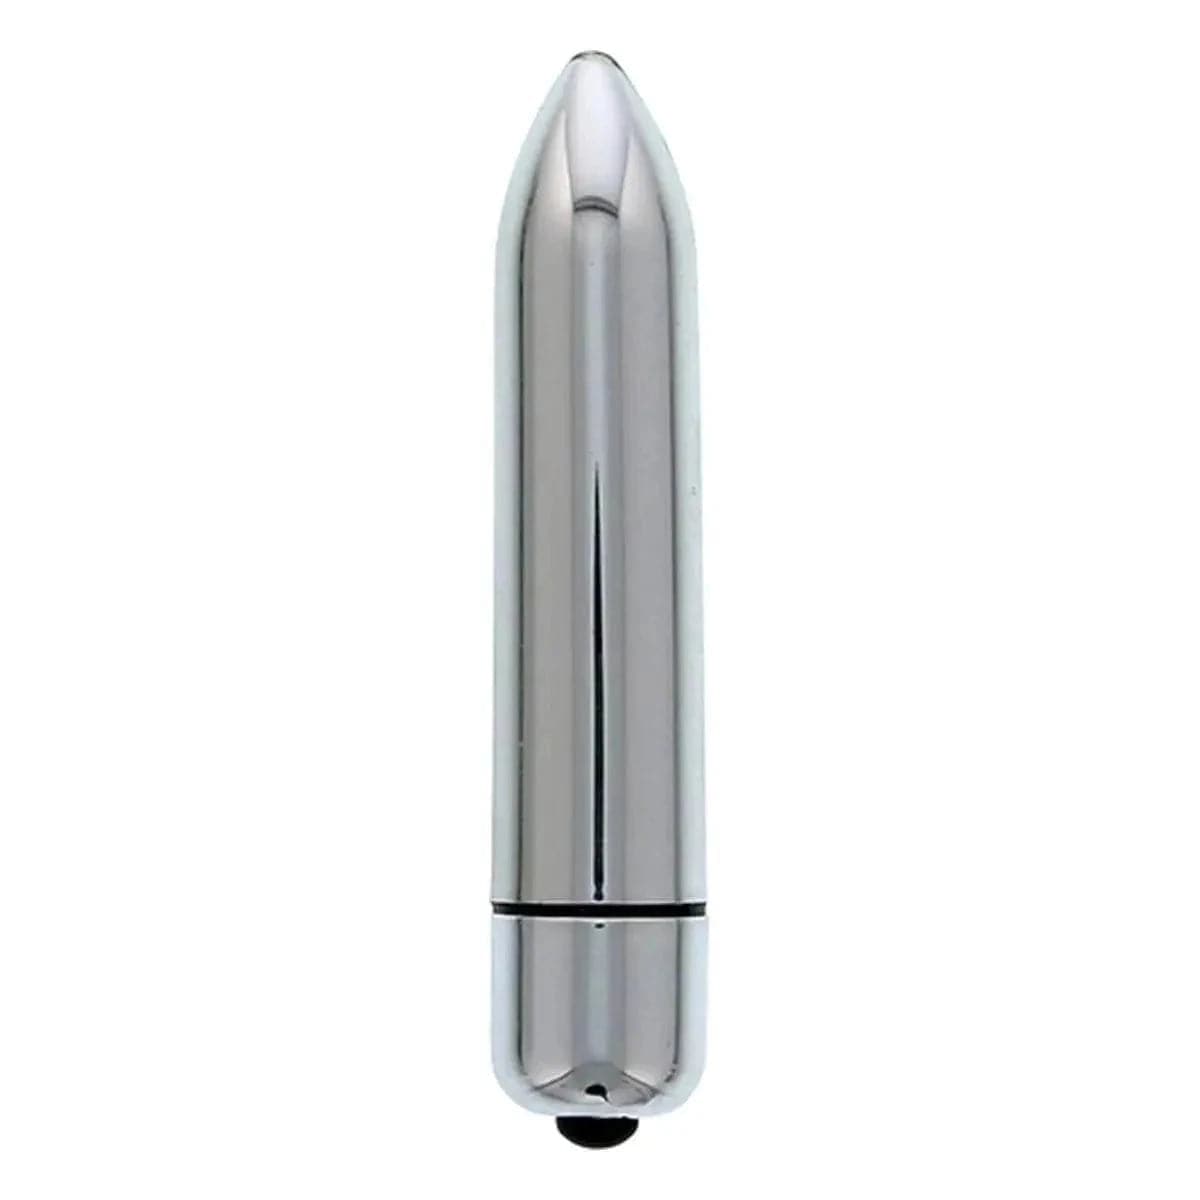 Bala Vibratória Climax Bullet Prateado, 9cm Ø1.7cm, 10vibrações